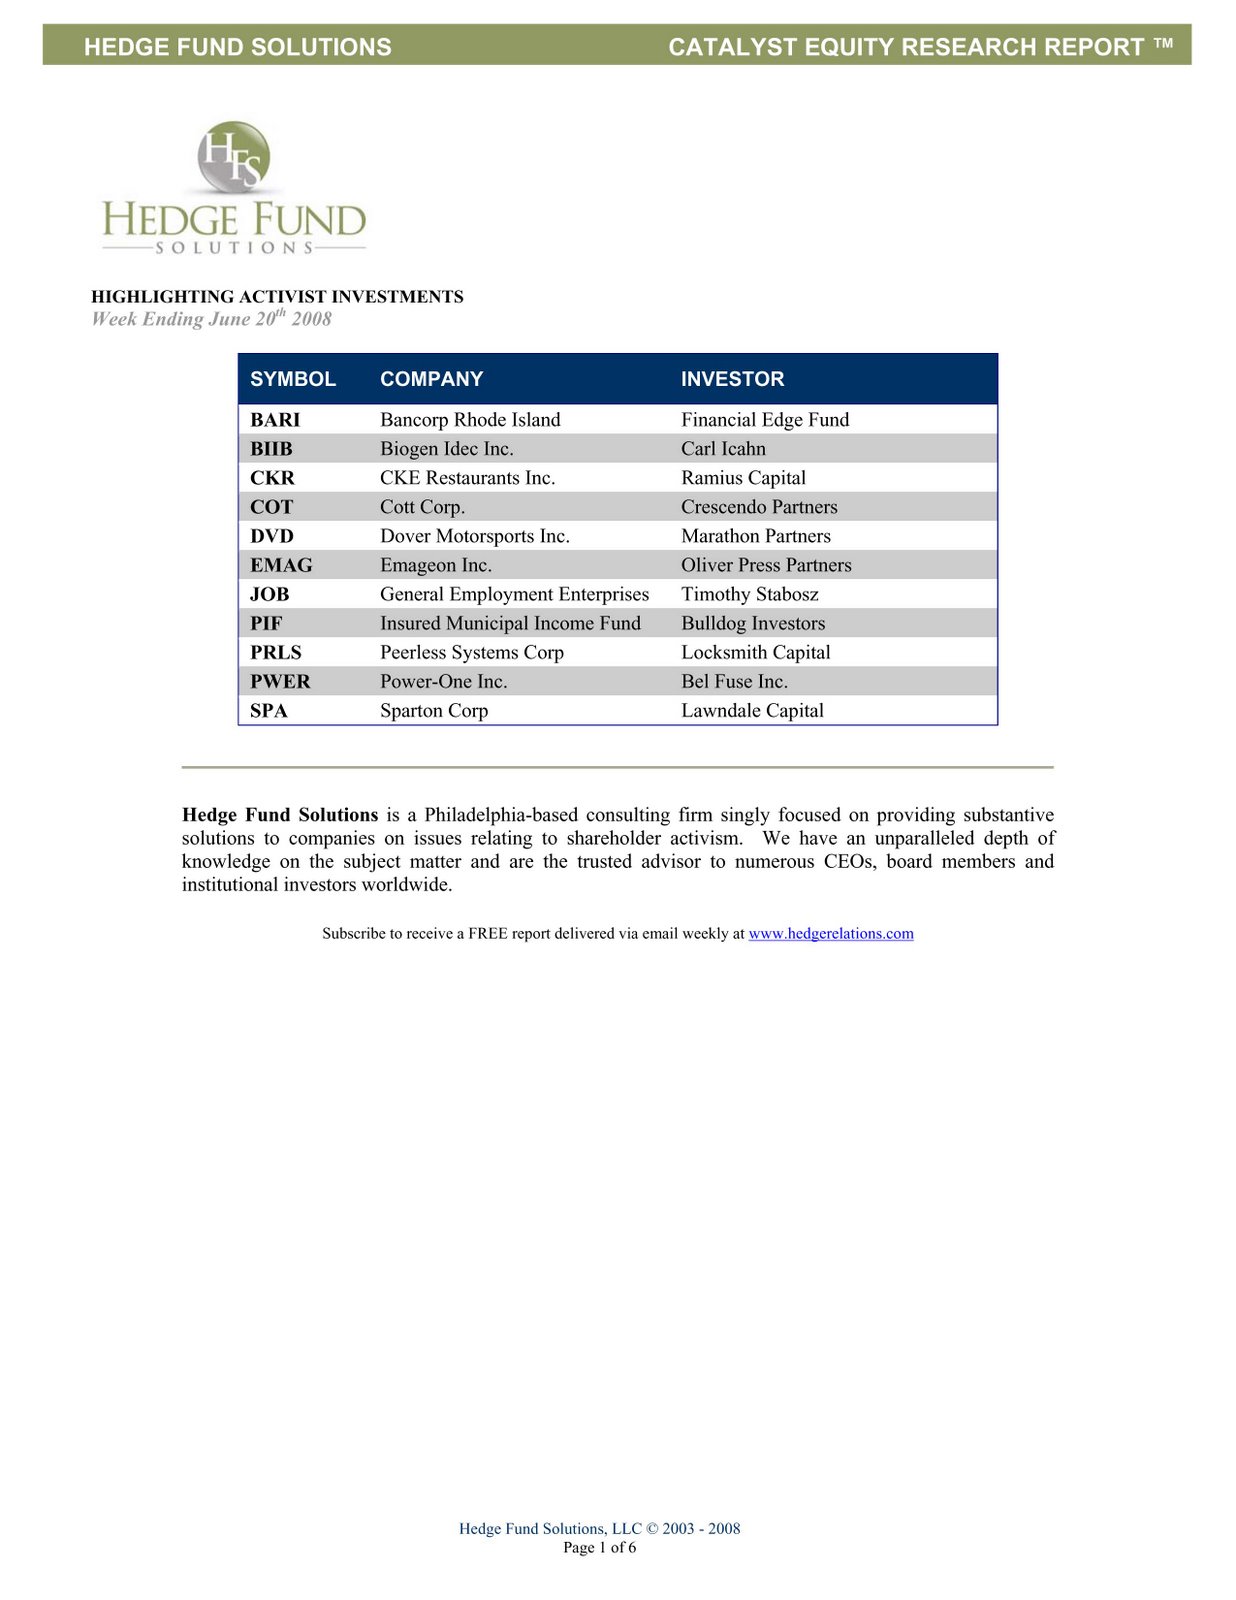 [HFS+-+Catalyst+Equity+Research+Report+Week+Ending+June+20+20081+copy.jpg]